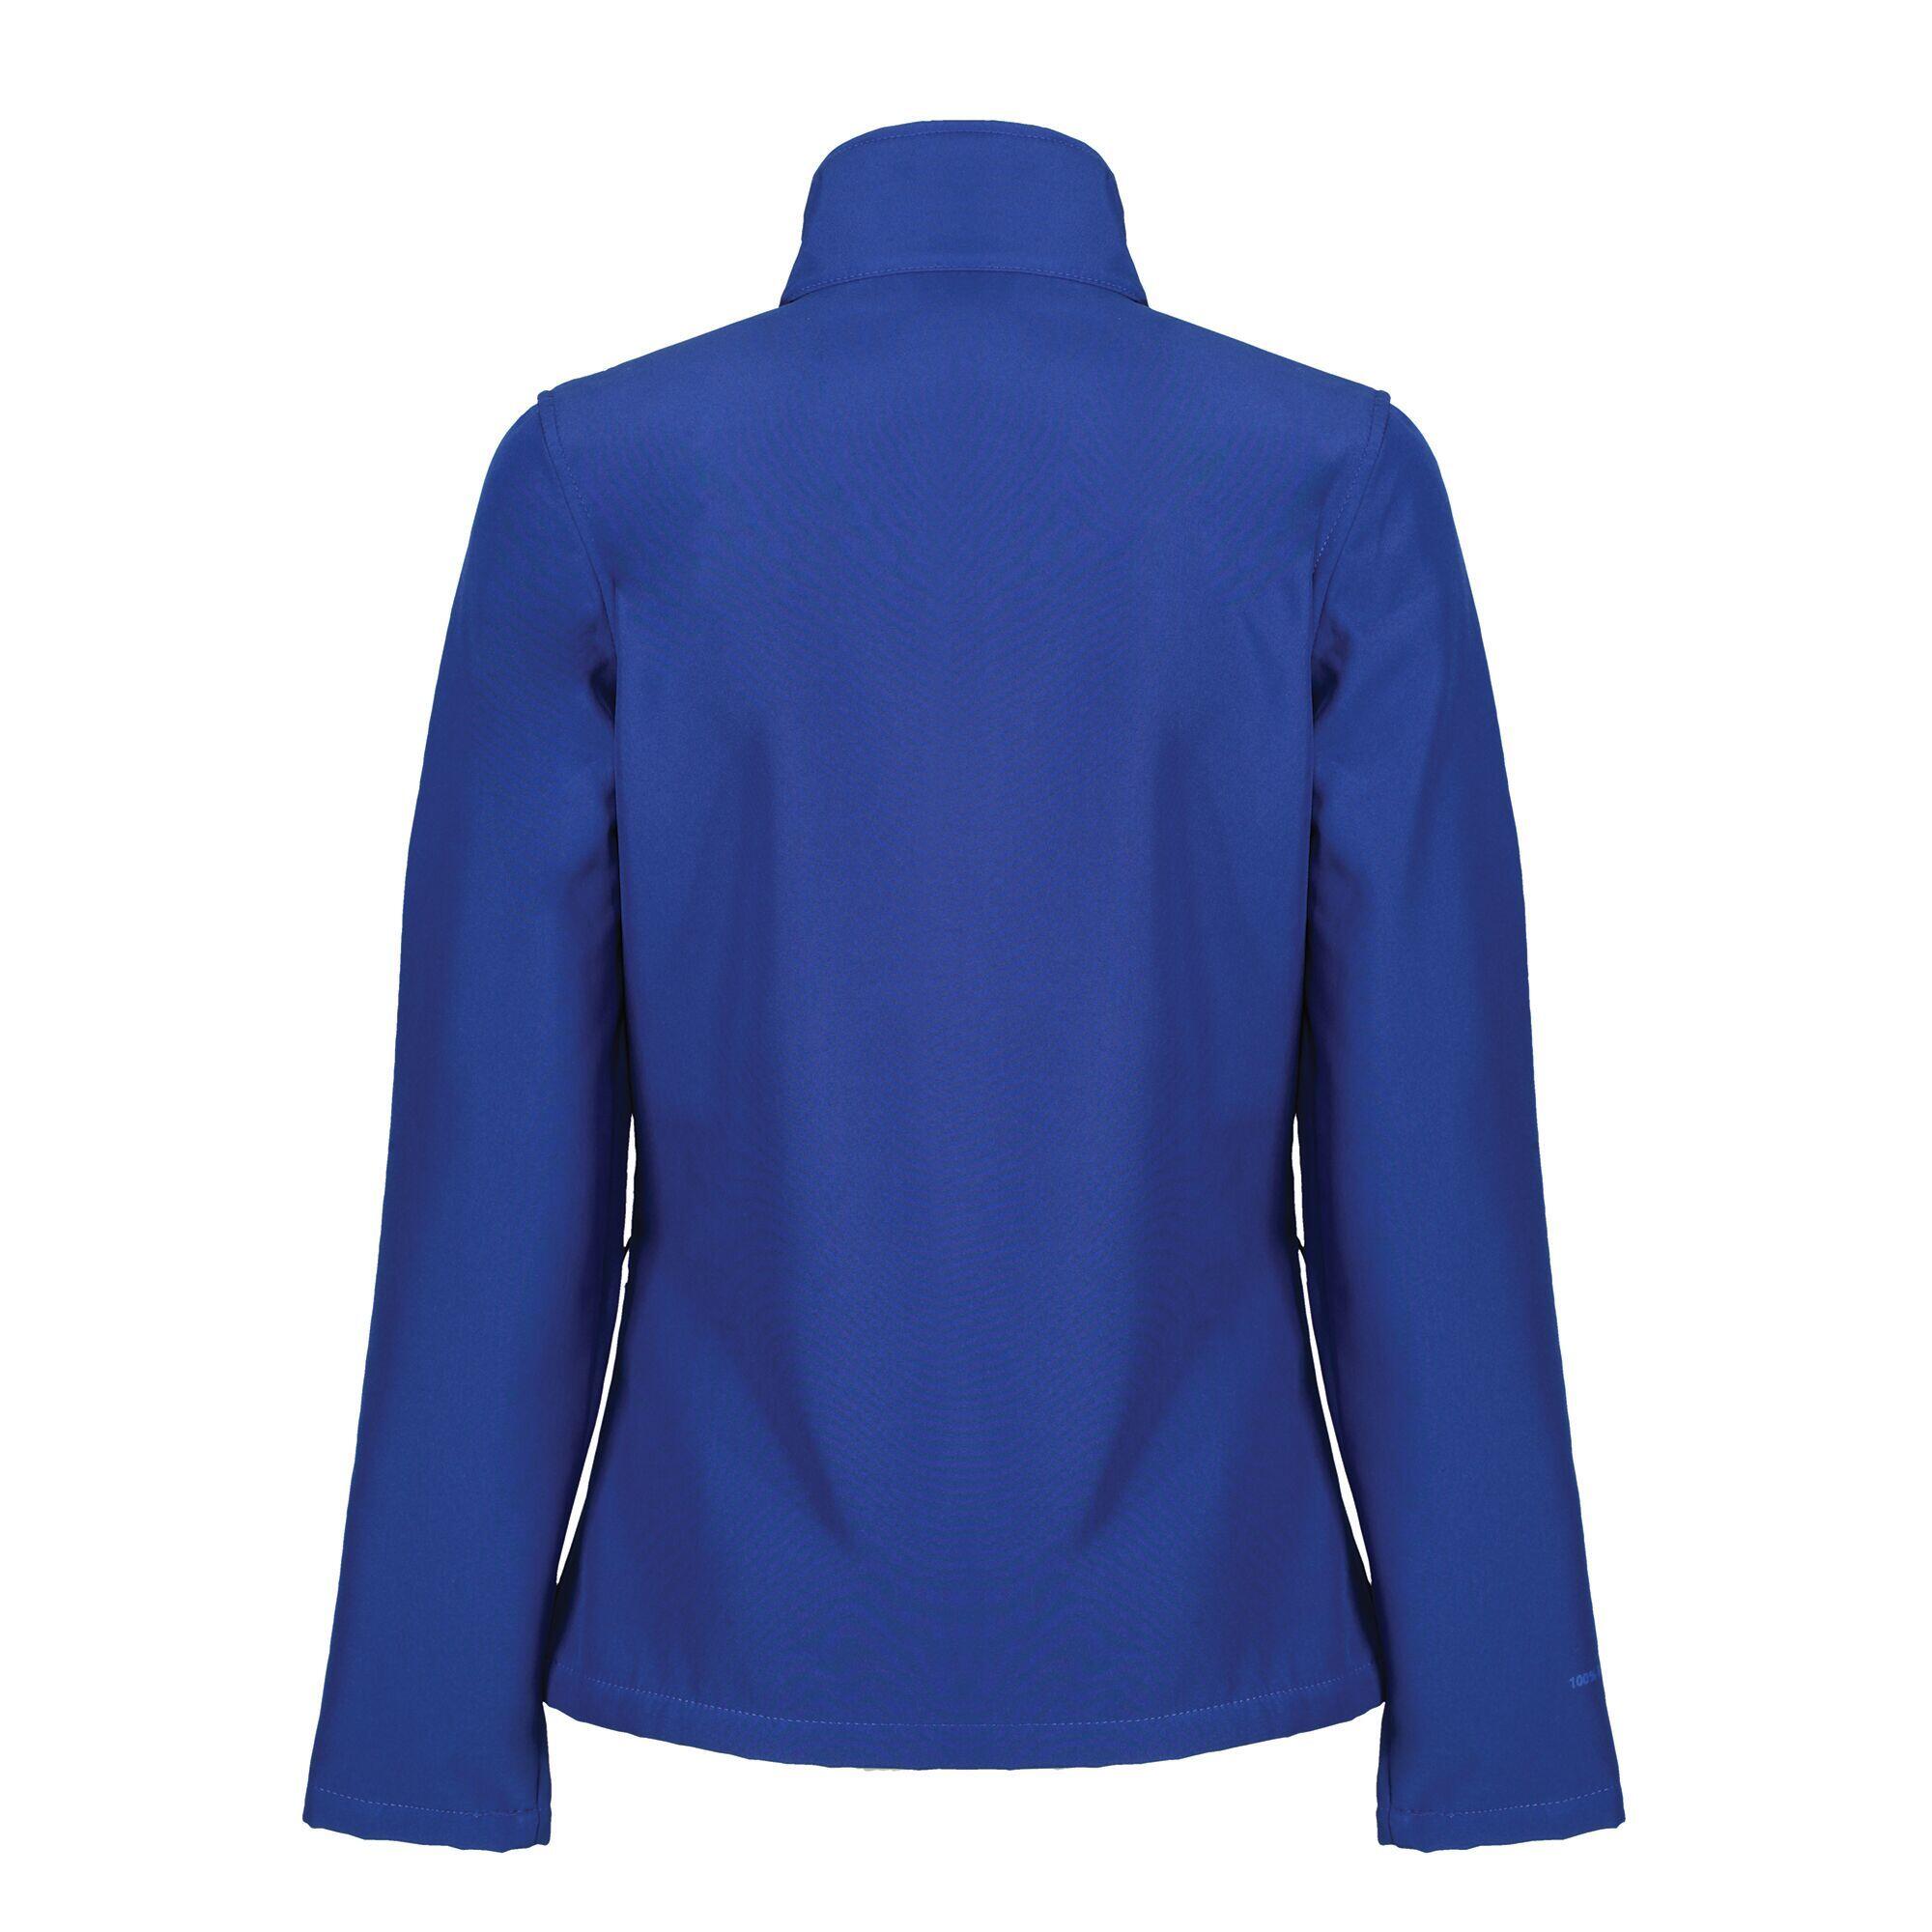 Womens/Ladies Honestly Made Softshell Jacket (Royal Blue) 2/4